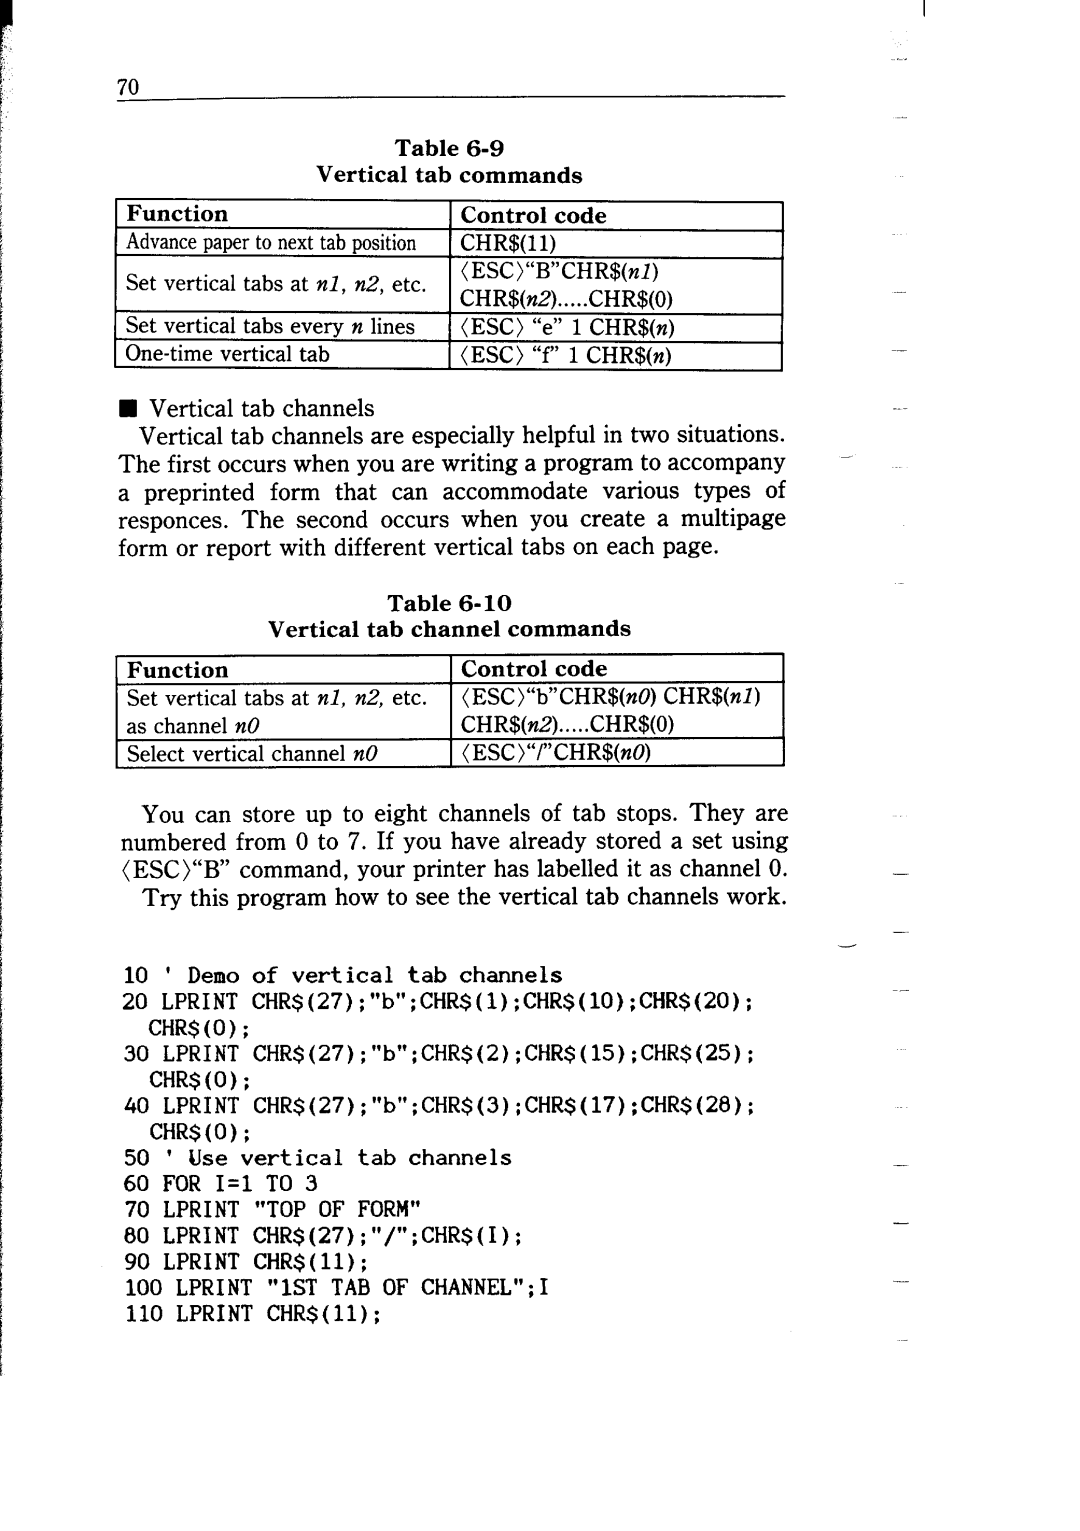 Star Micronics NB-15 user manual W Vertical tab channels, Chrso 